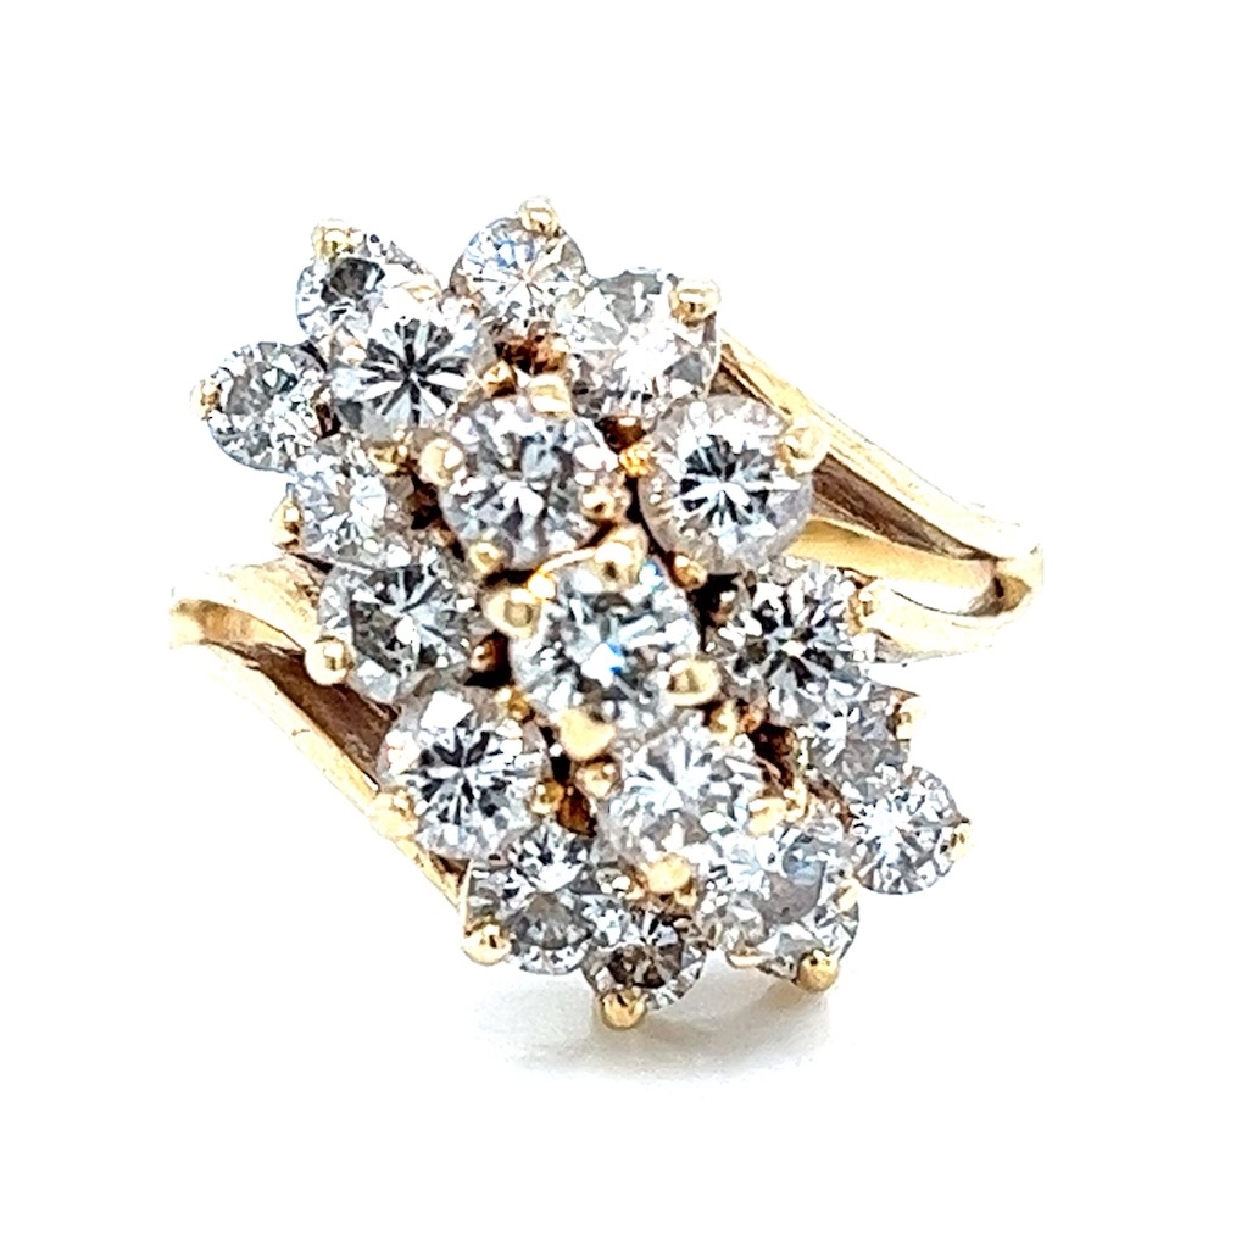 14K Yellow Gold Three Row Brown Diamond Ring Size 8.5 
2.50CT
*Two chipped diamonds